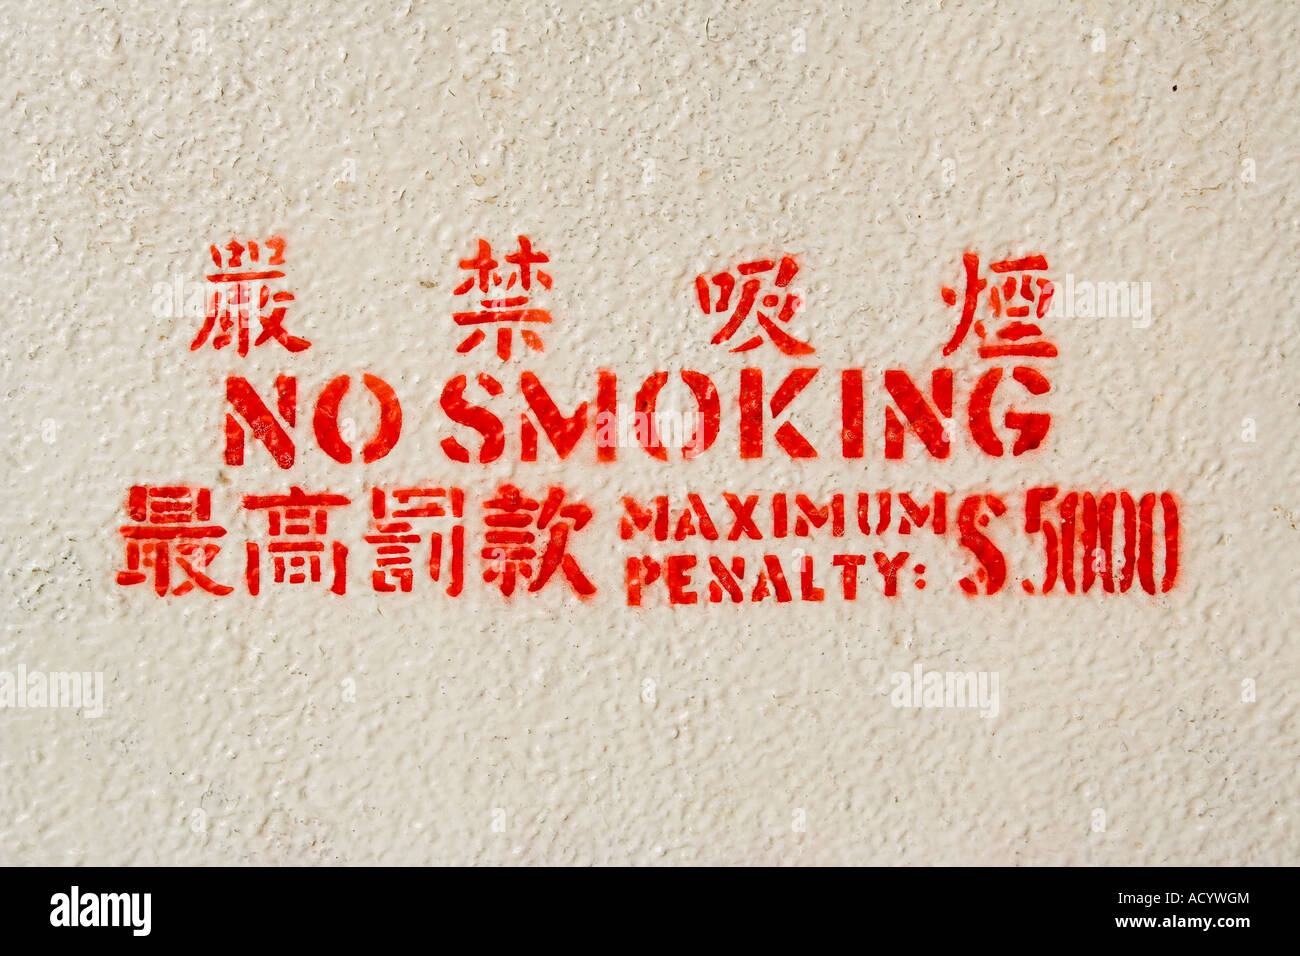 smoking-and-risk-perceptions-in-china-urbachina